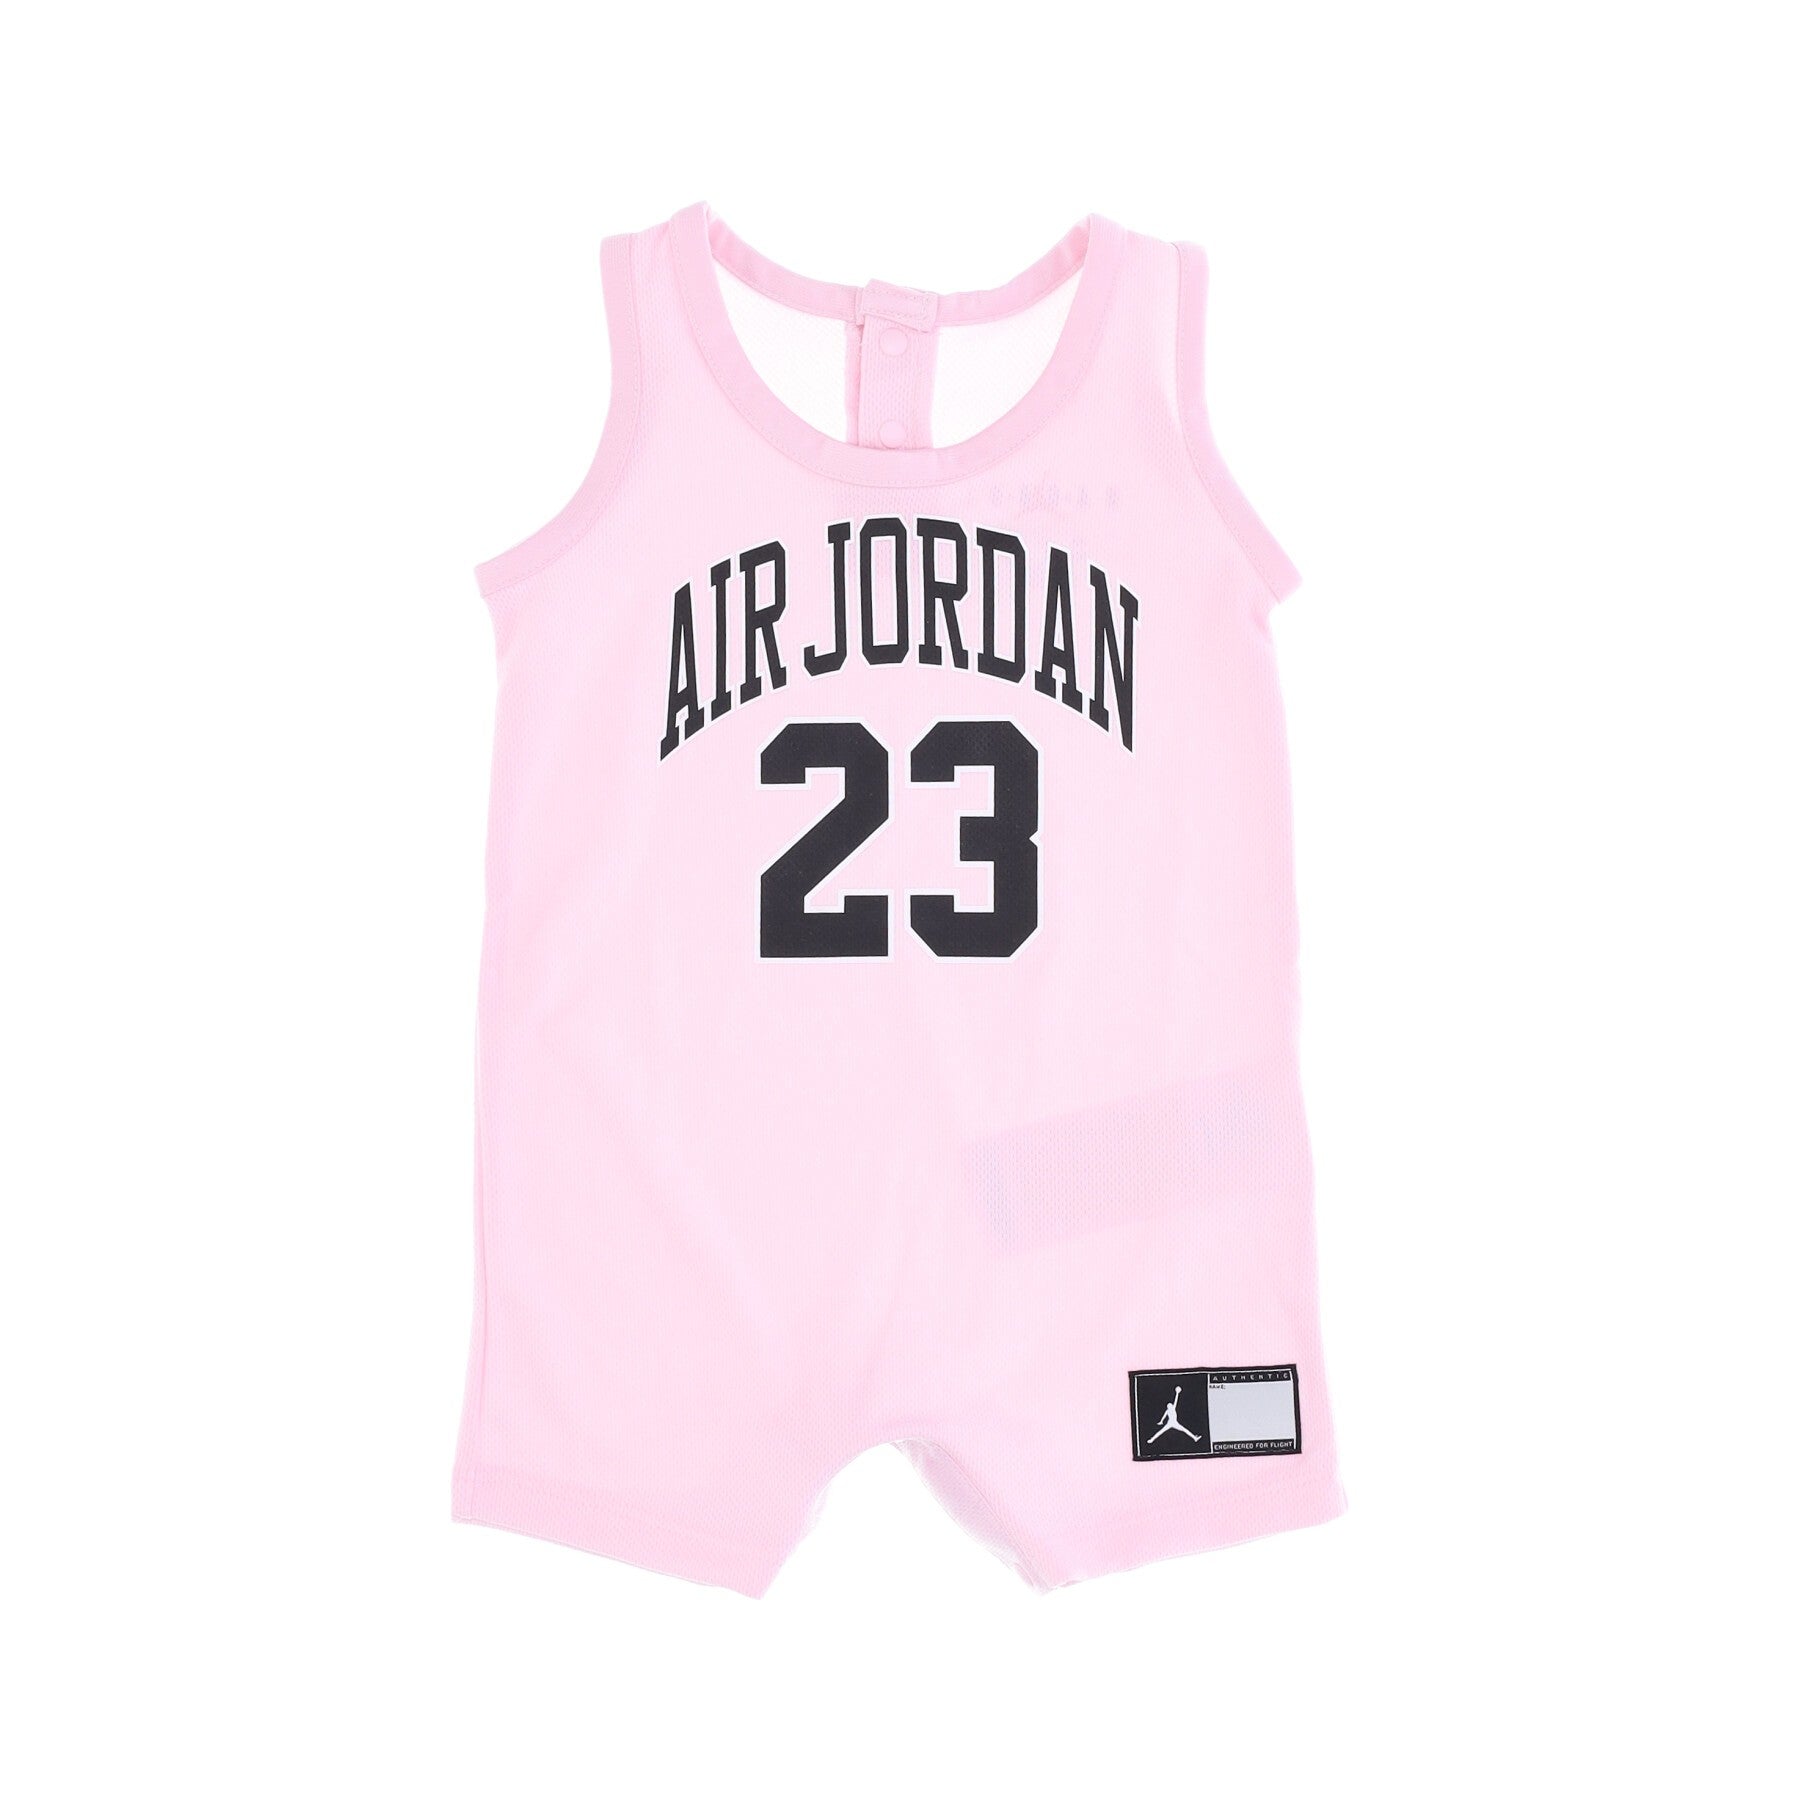 Hbr Jordan Jersey Romper Baby Bodysuit